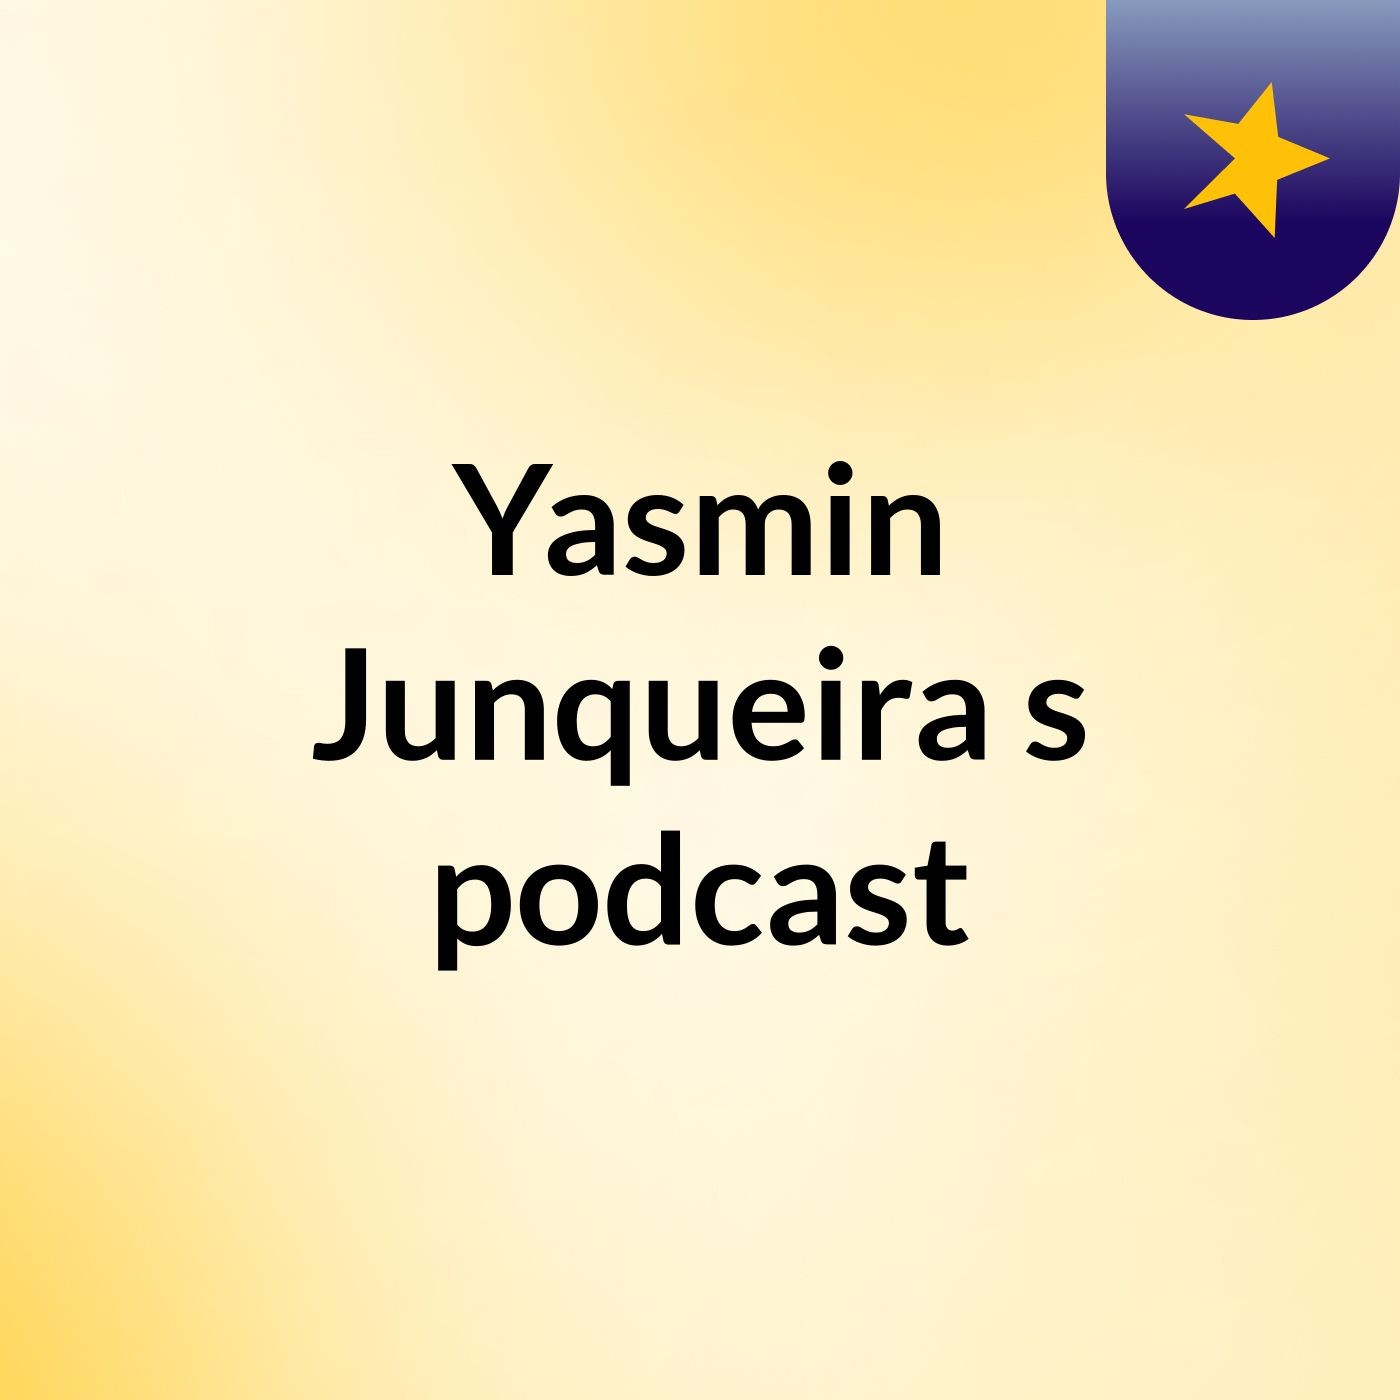 Yasmin Junqueira's podcast